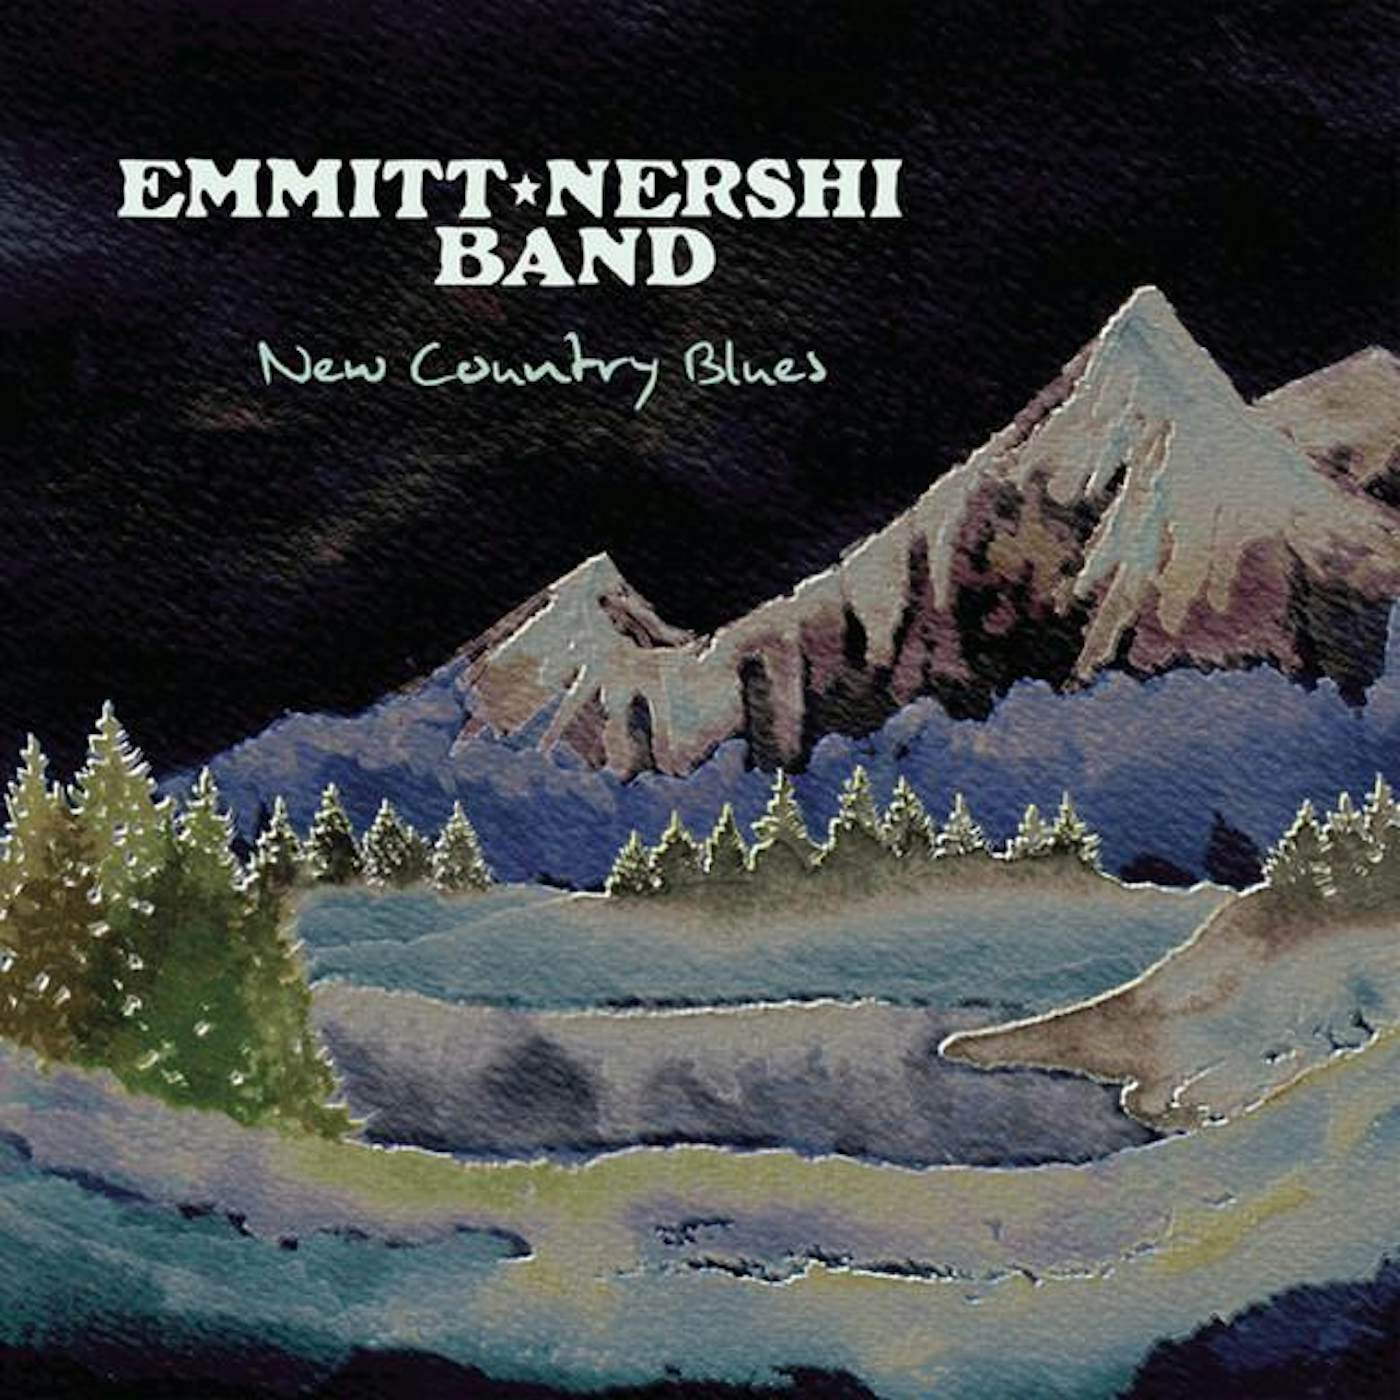 Emmitt-Nershi Band